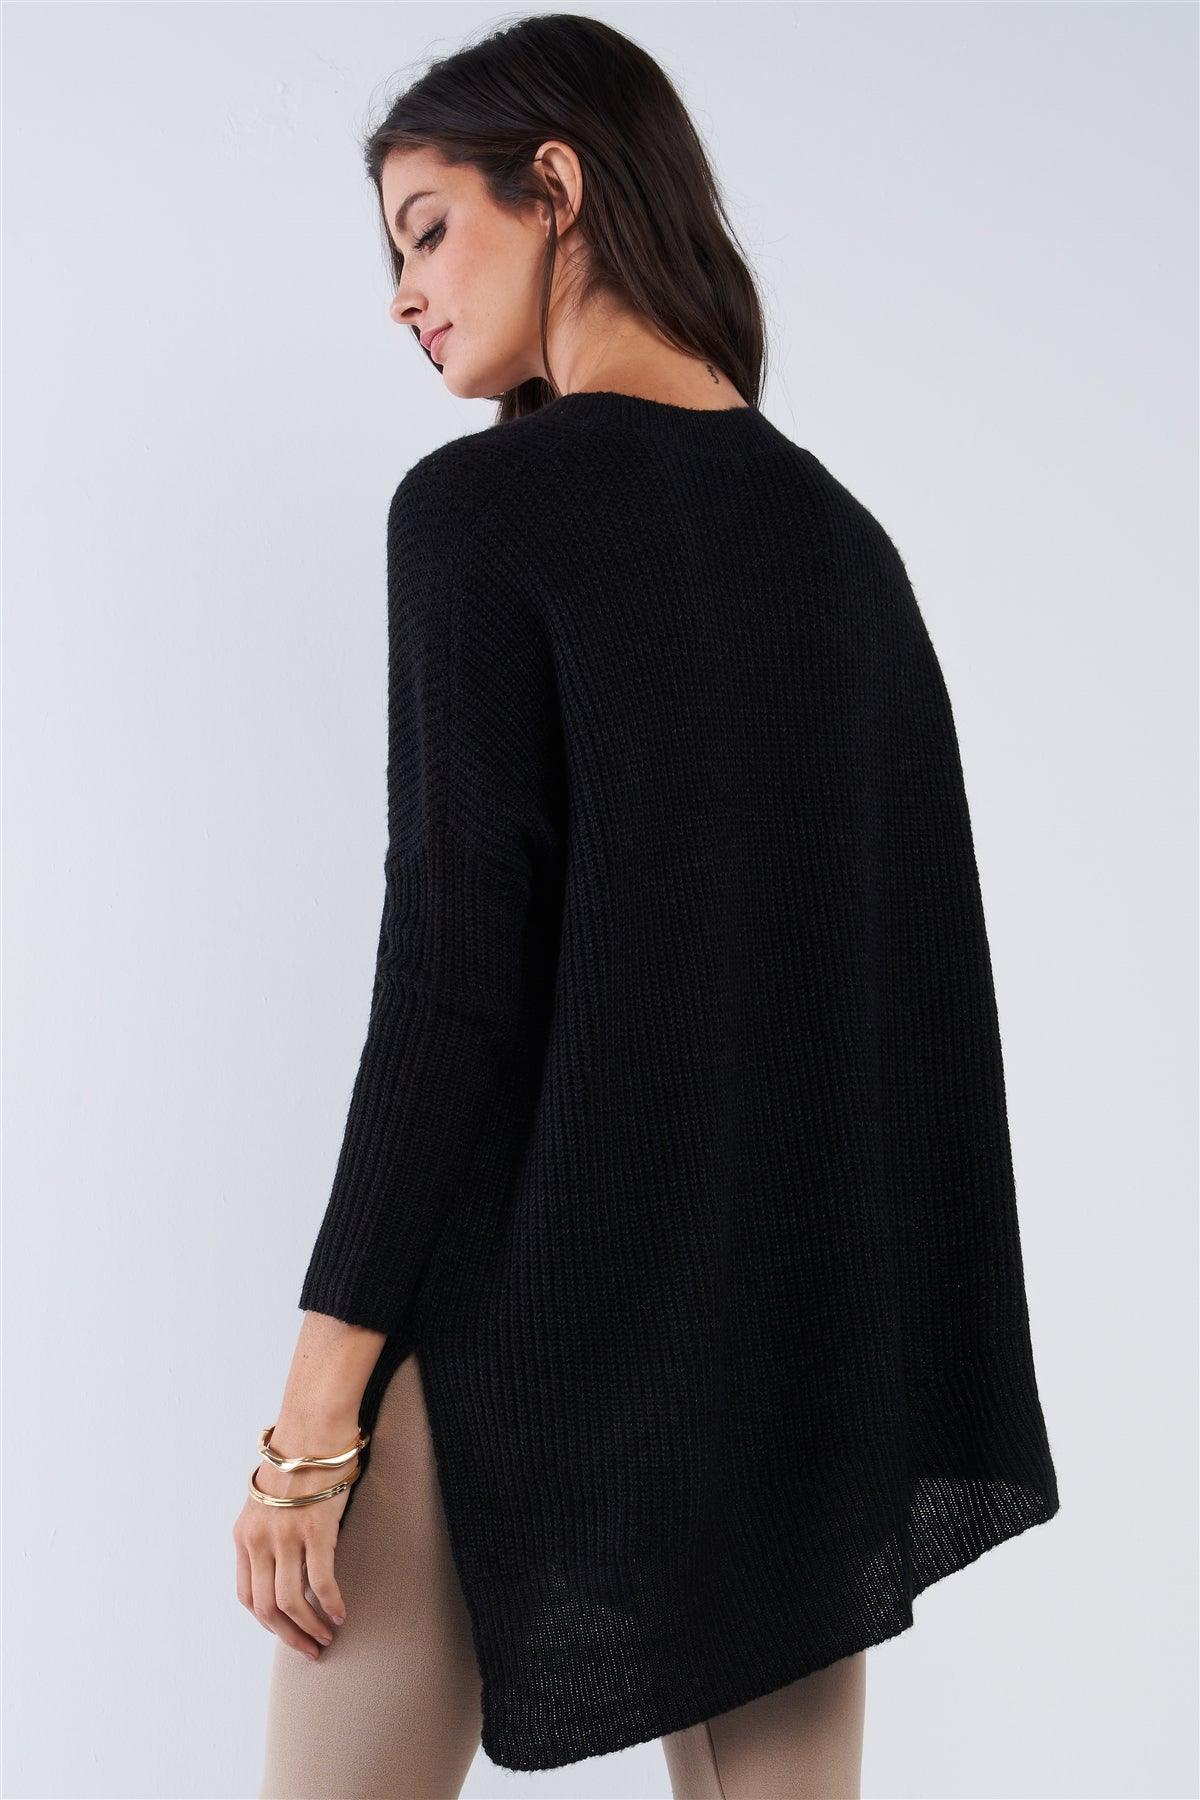 Charcoal Black V-Neck Asymmetrical Oversized Long Sleeve Gold Zipper Sweater /4-2